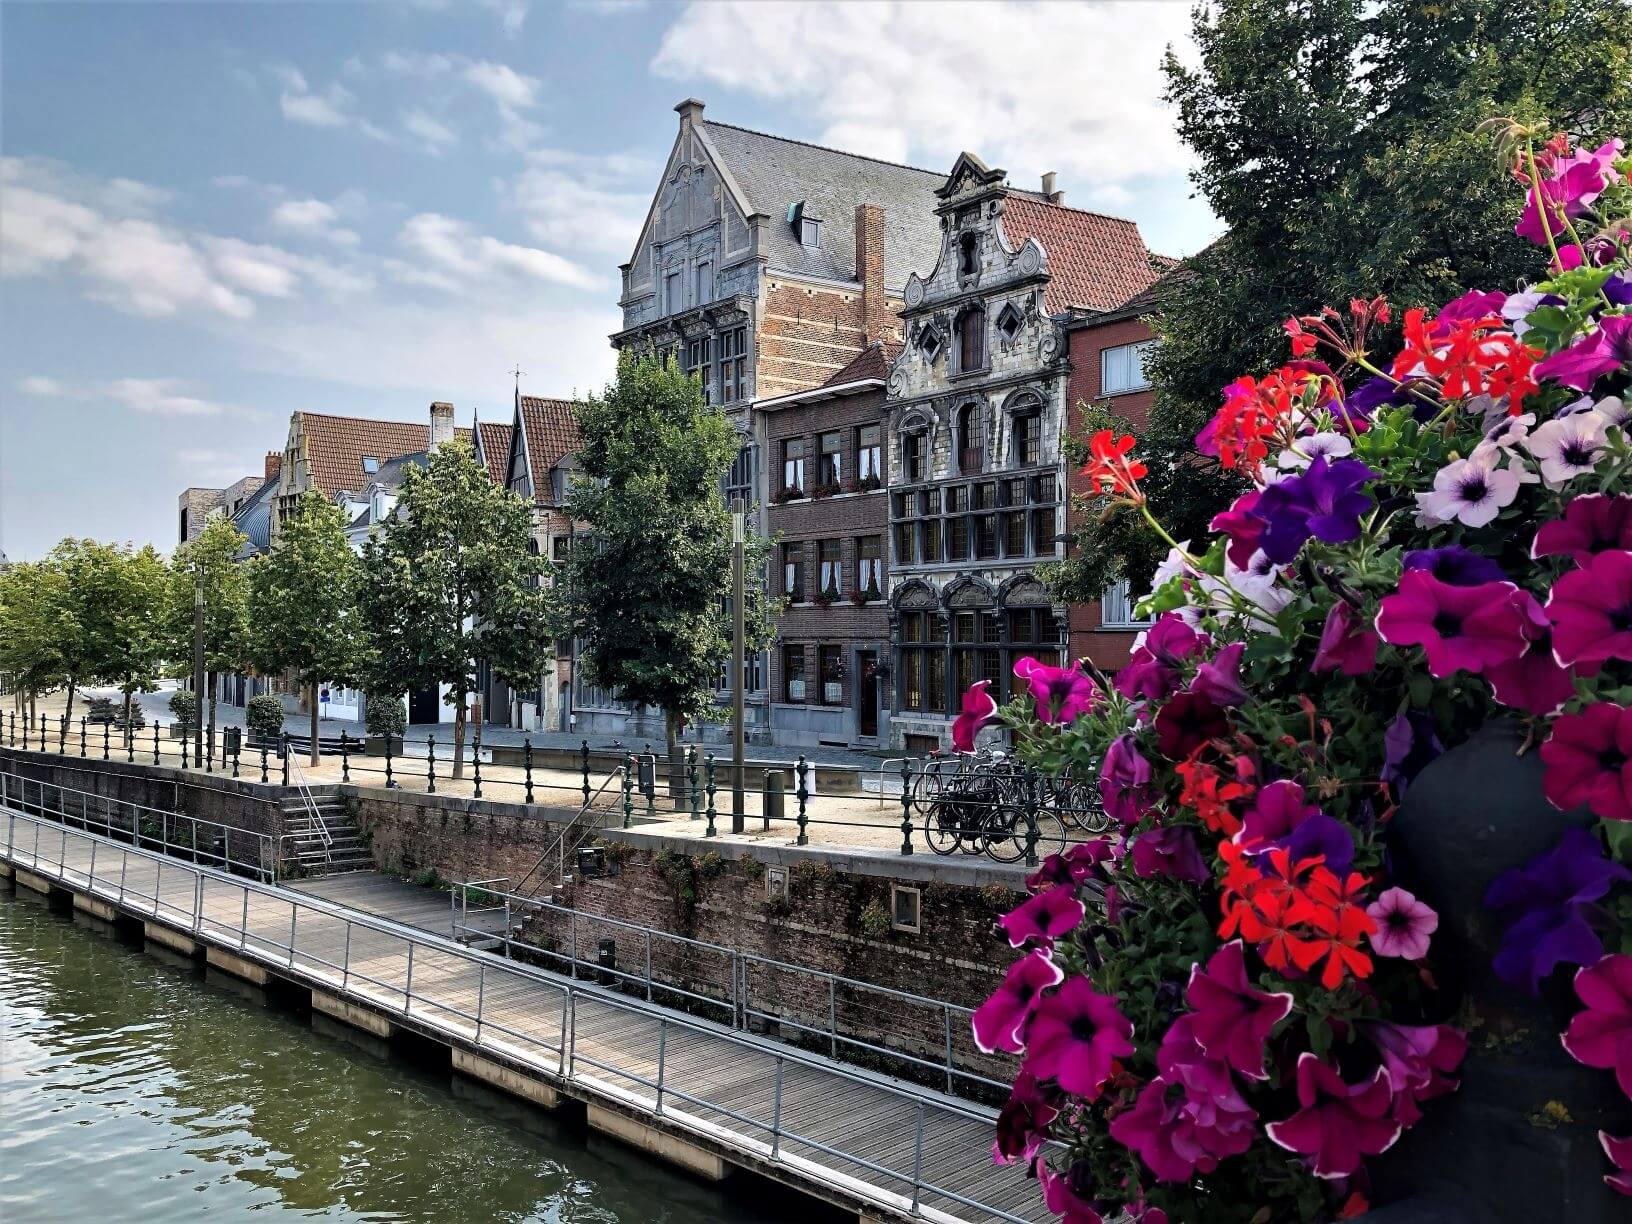 Mechelen Belgium with flowers, Flemish buildings. Street photography.